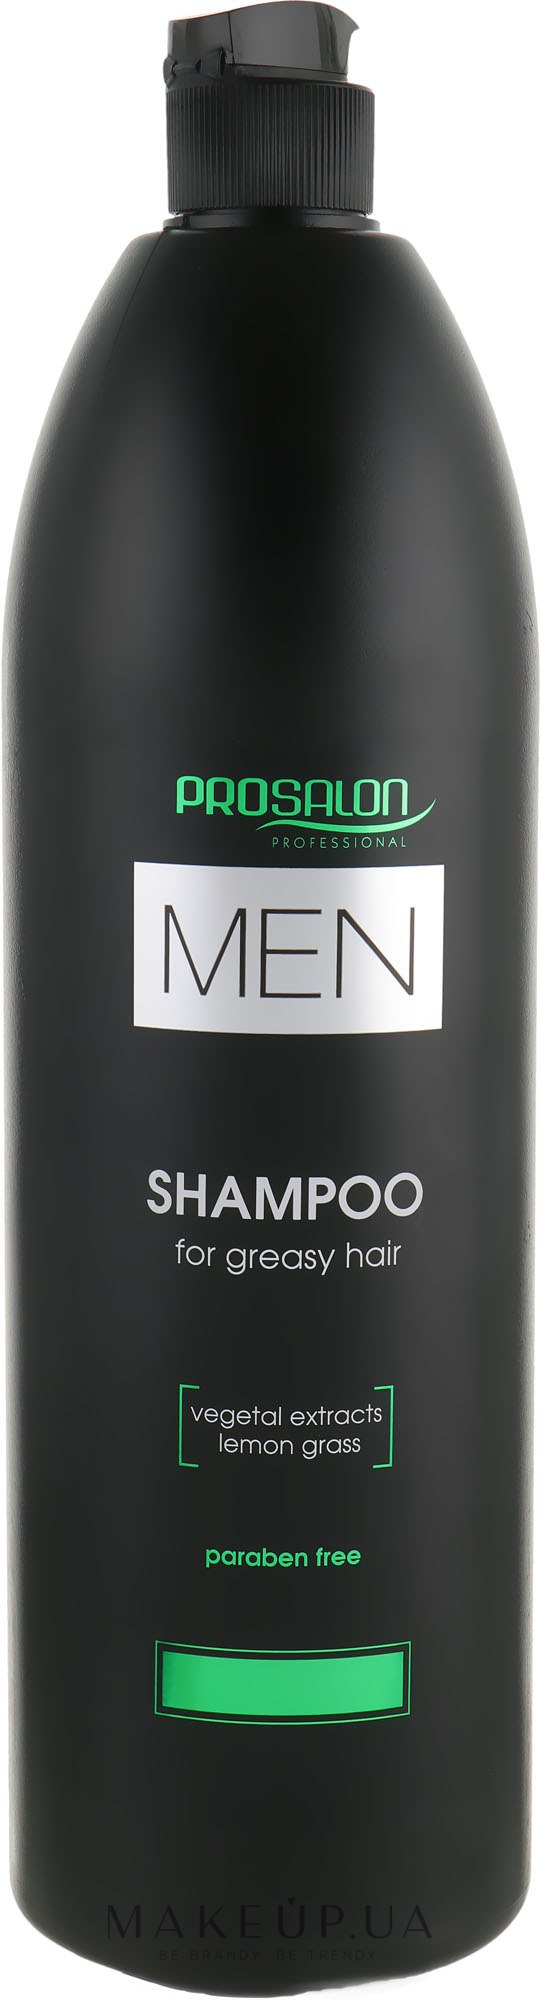 Шампунь для склонных к жирности волос - Prosalon Men Shampoo For Greasy Hair — фото 1000ml